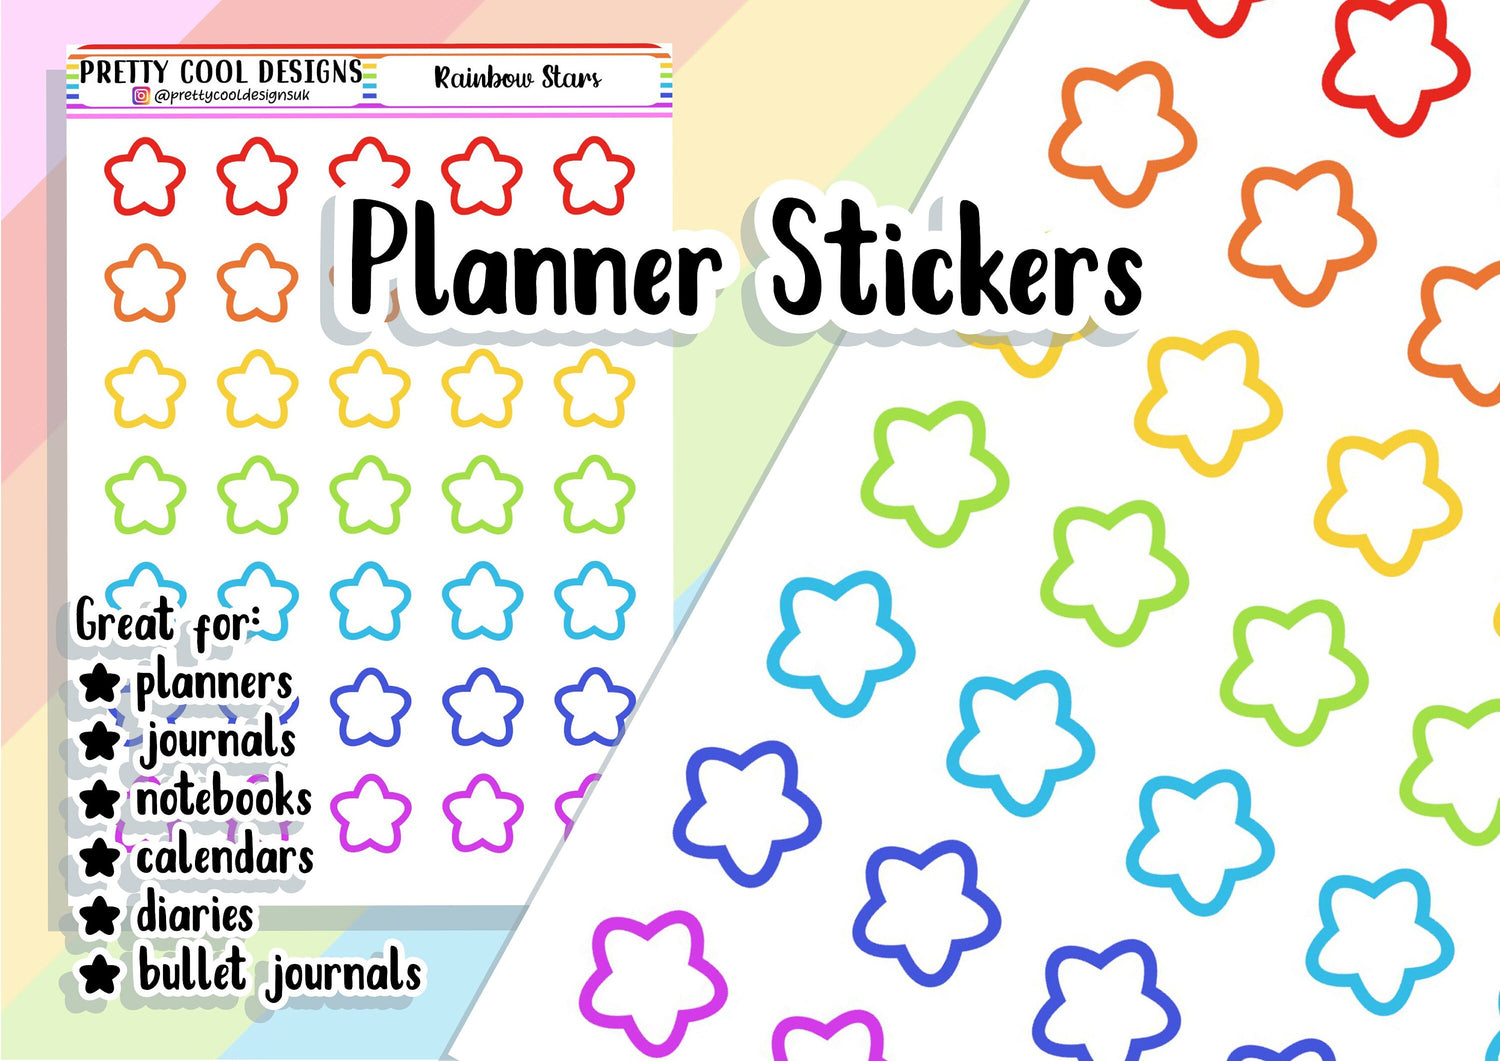 Rainbow Stars Planner Stickers UK - 1 Sheet